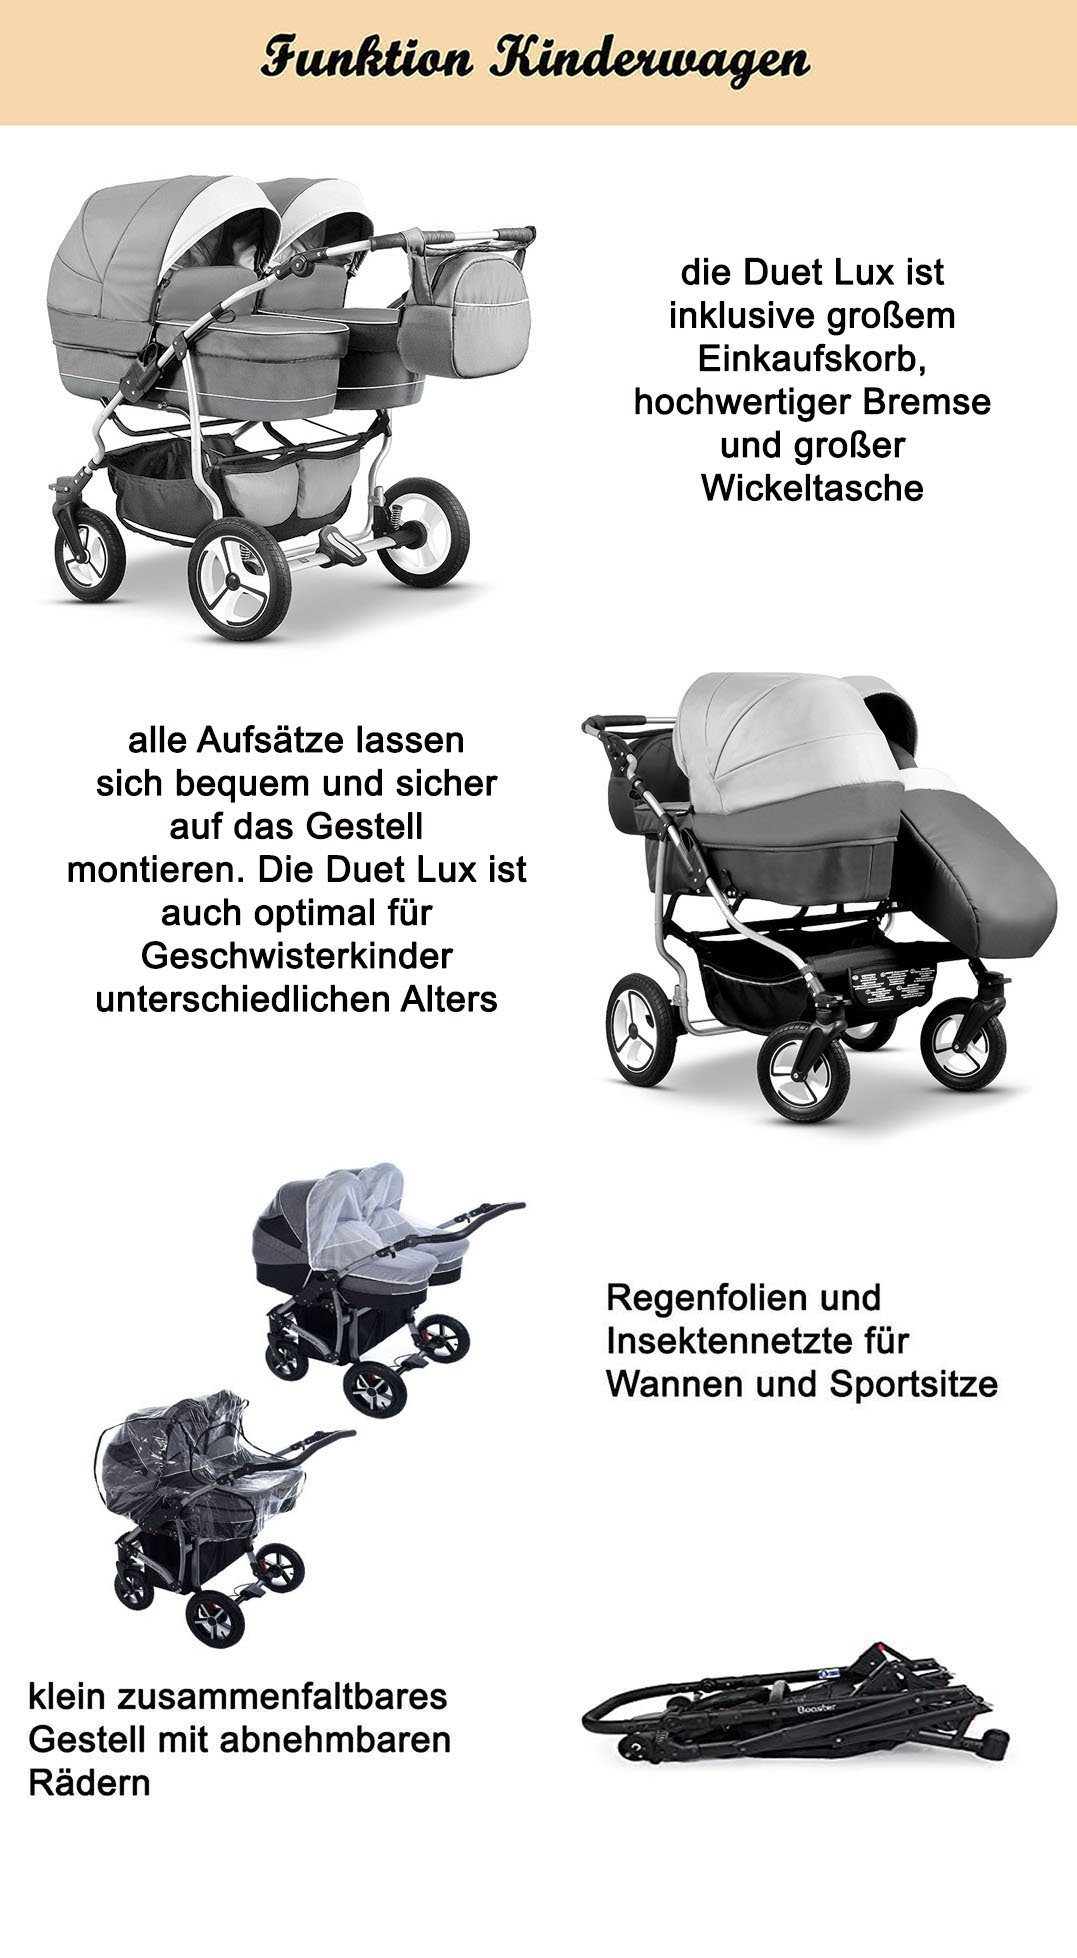 13 1 in in - Autositze inkl. 3 17 Teile Weiß-Schwarz Farben Elcar Zwillings-Kombikinderwagen - Duet Lux